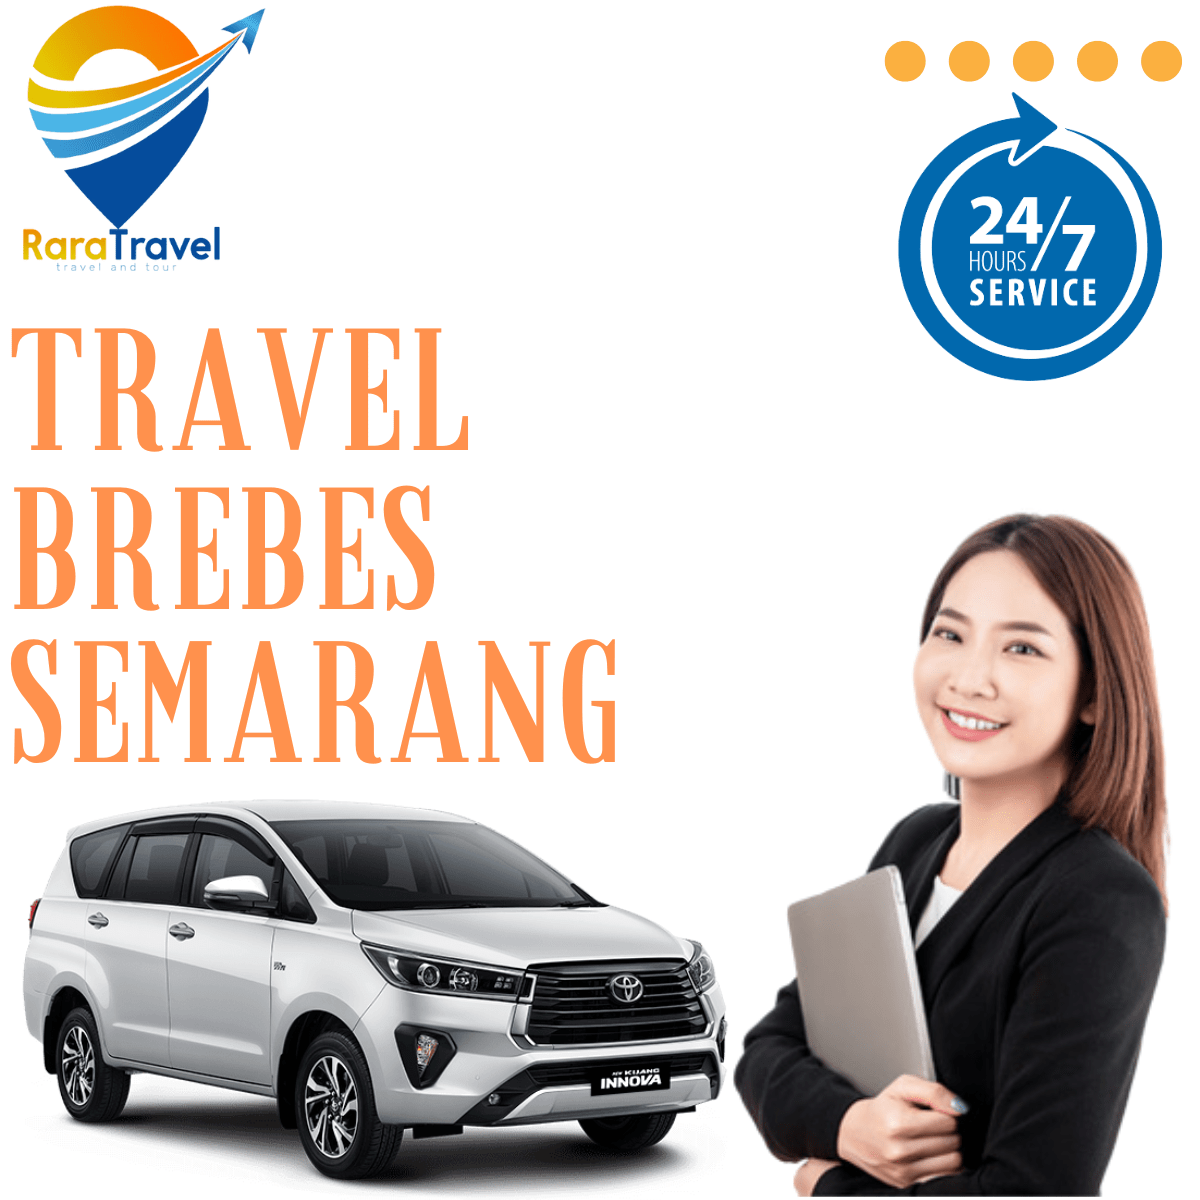 Travel Brebes Semarang - RARATRAVEL.ID